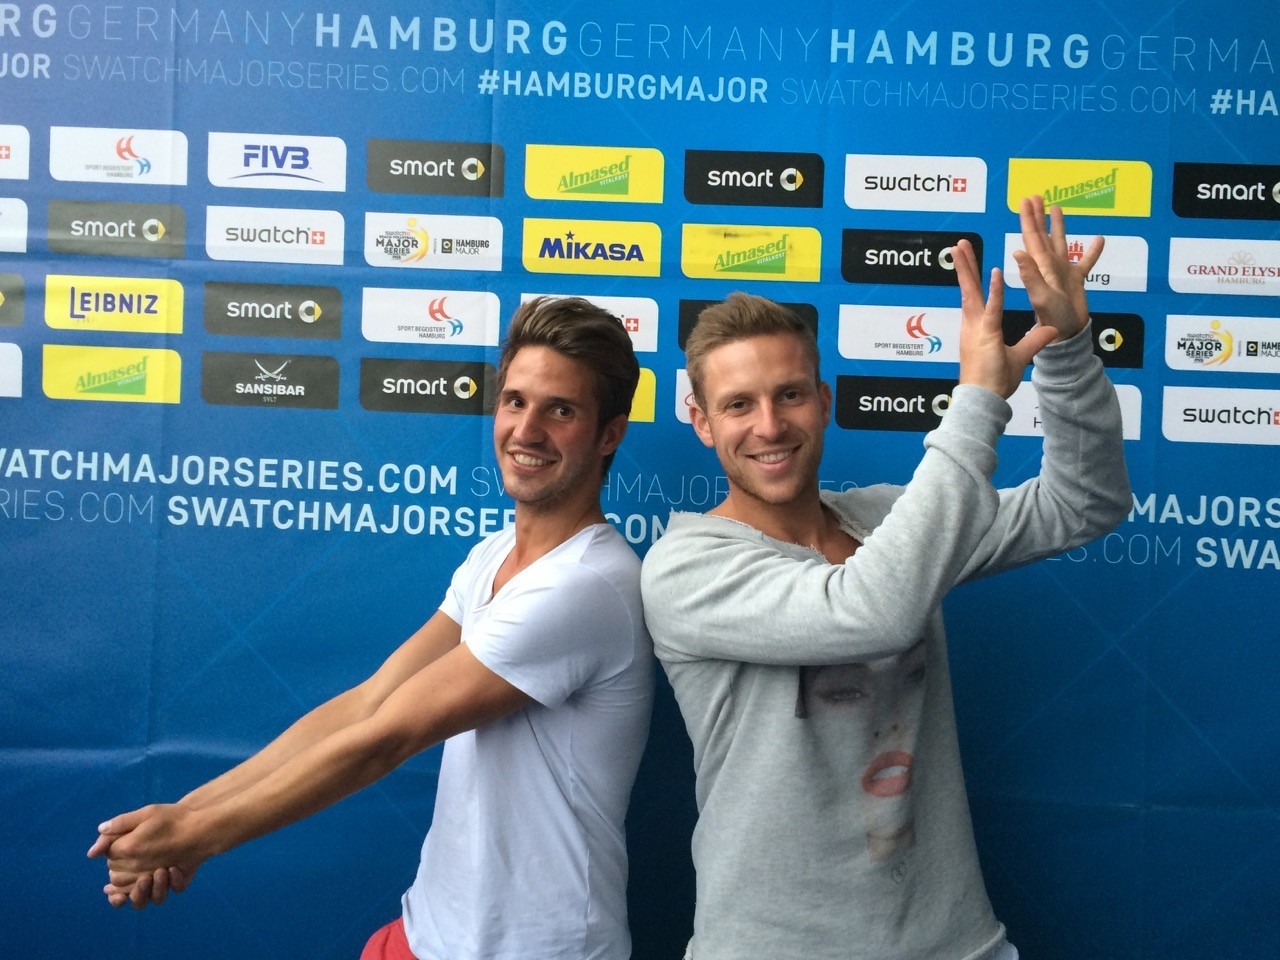 Tristan (left) and Finn found a new passion in Hamburg Credit: Ninja Priesterjahn